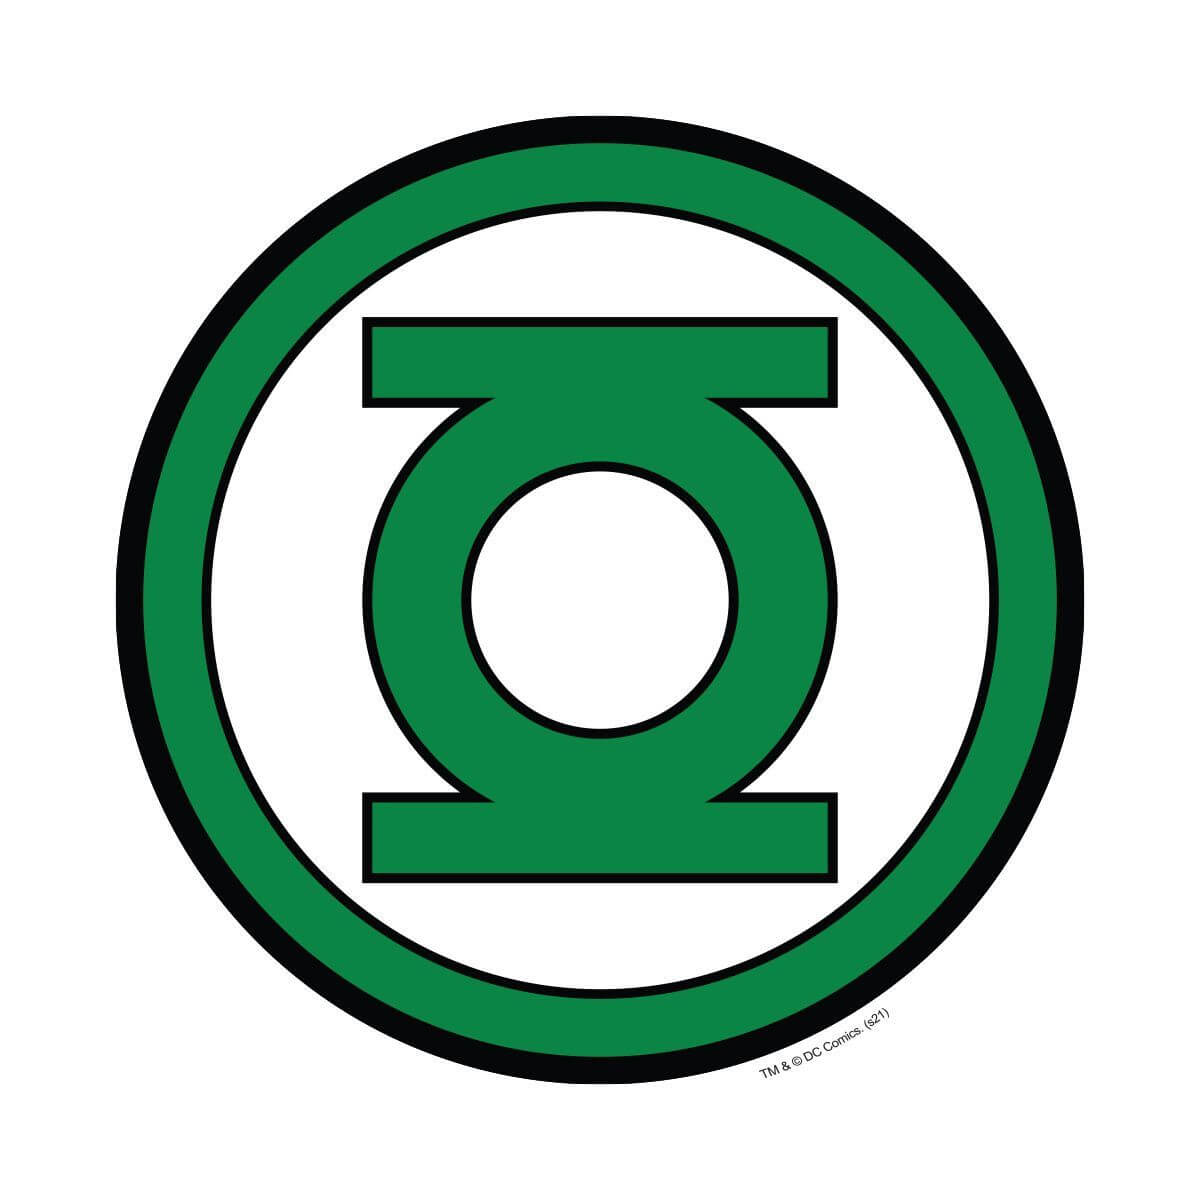 Kismet Decals Green Lantern Logo Licensed Wall Sticker - Easy DIY Justice League Home & Room Decor Wall Art - Kismet Decals